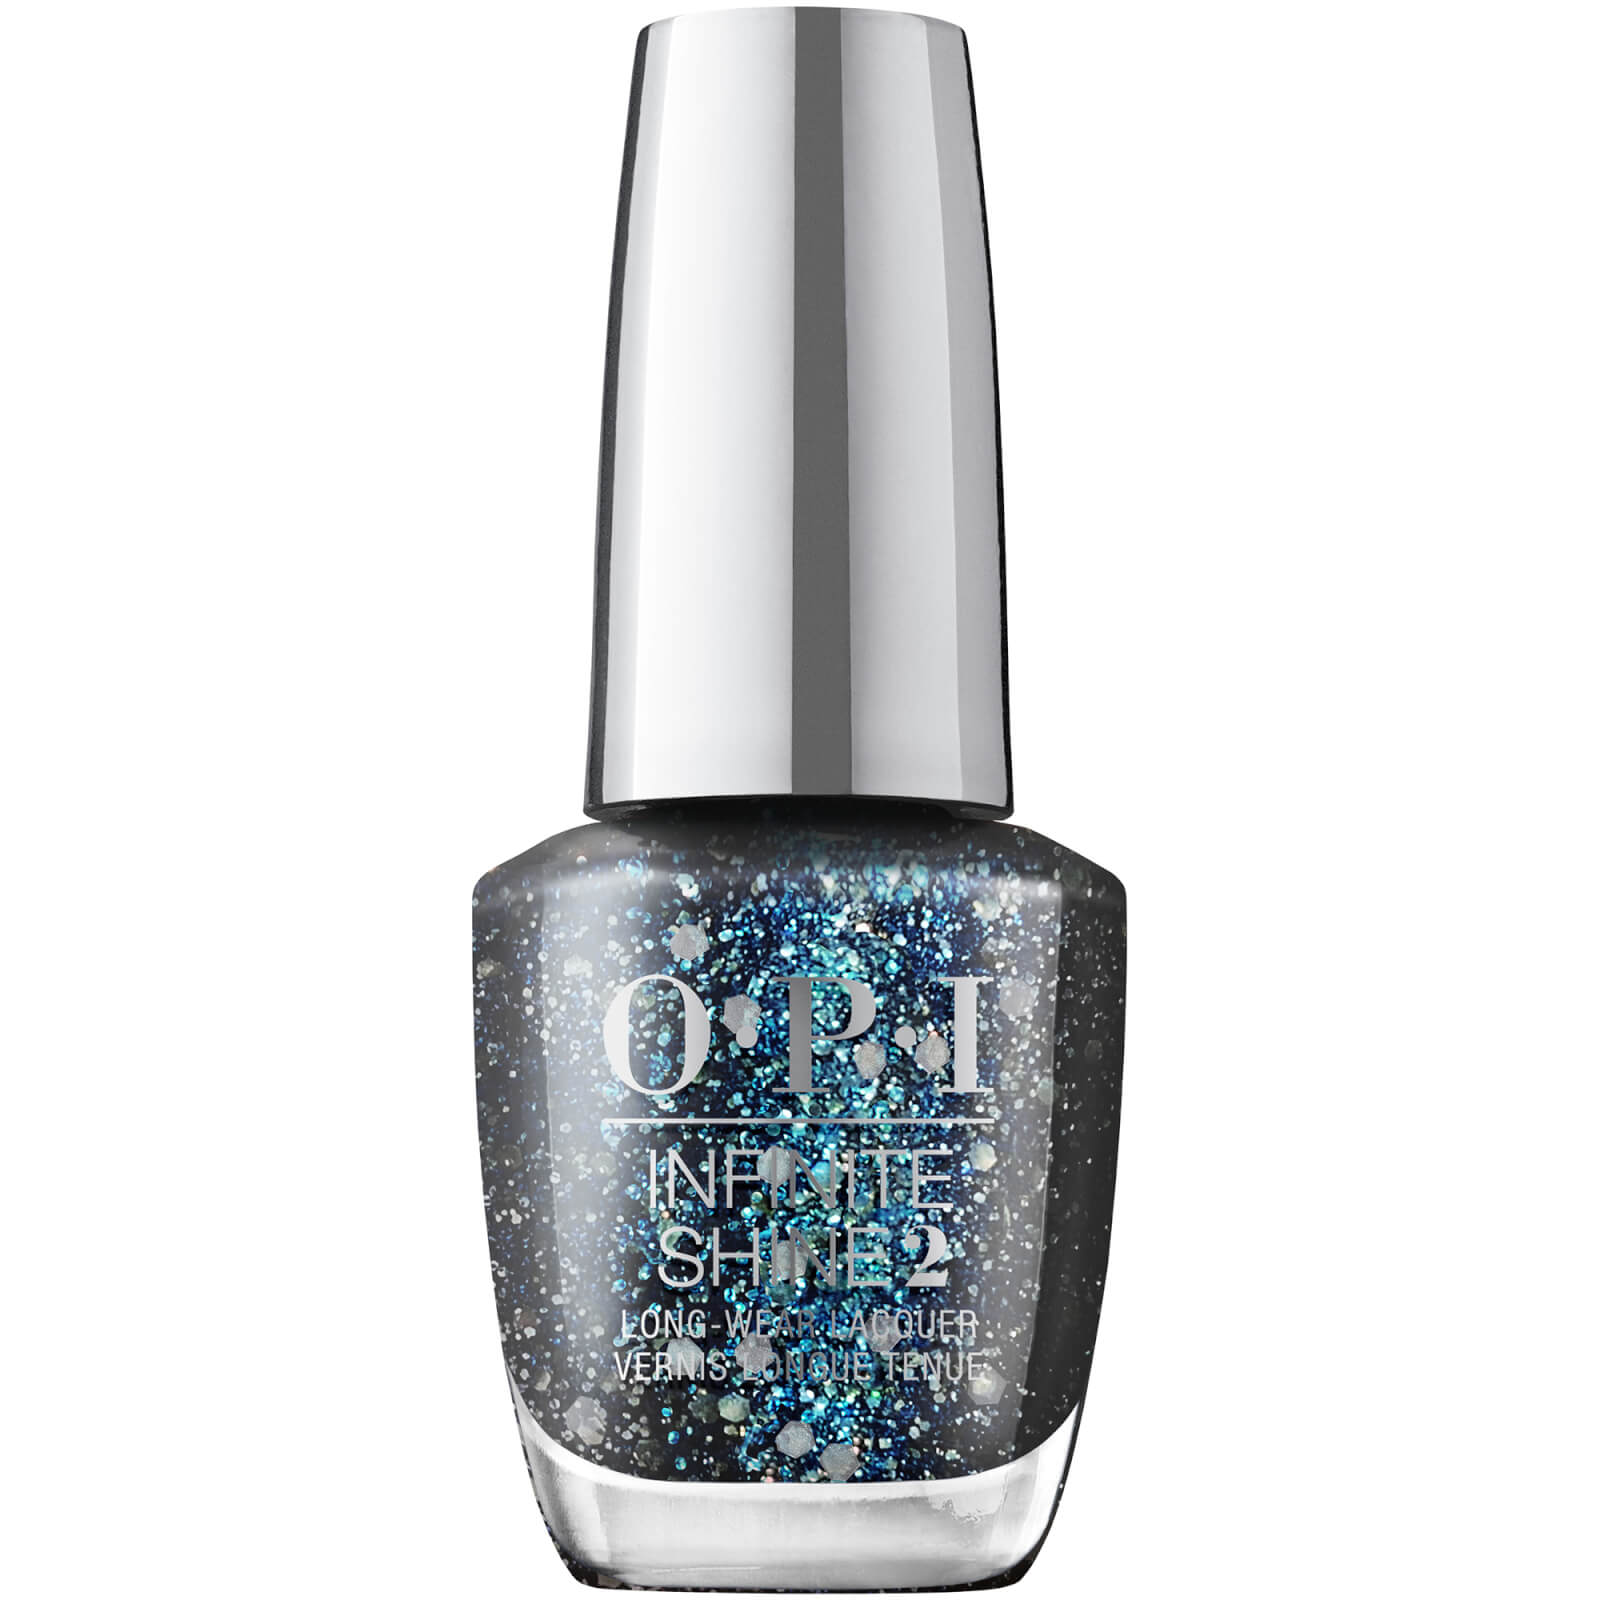 Opi Jewel Be Bold Collection Infinite Shine Nail Polish 15ml (various Shades) - 'm A Gem